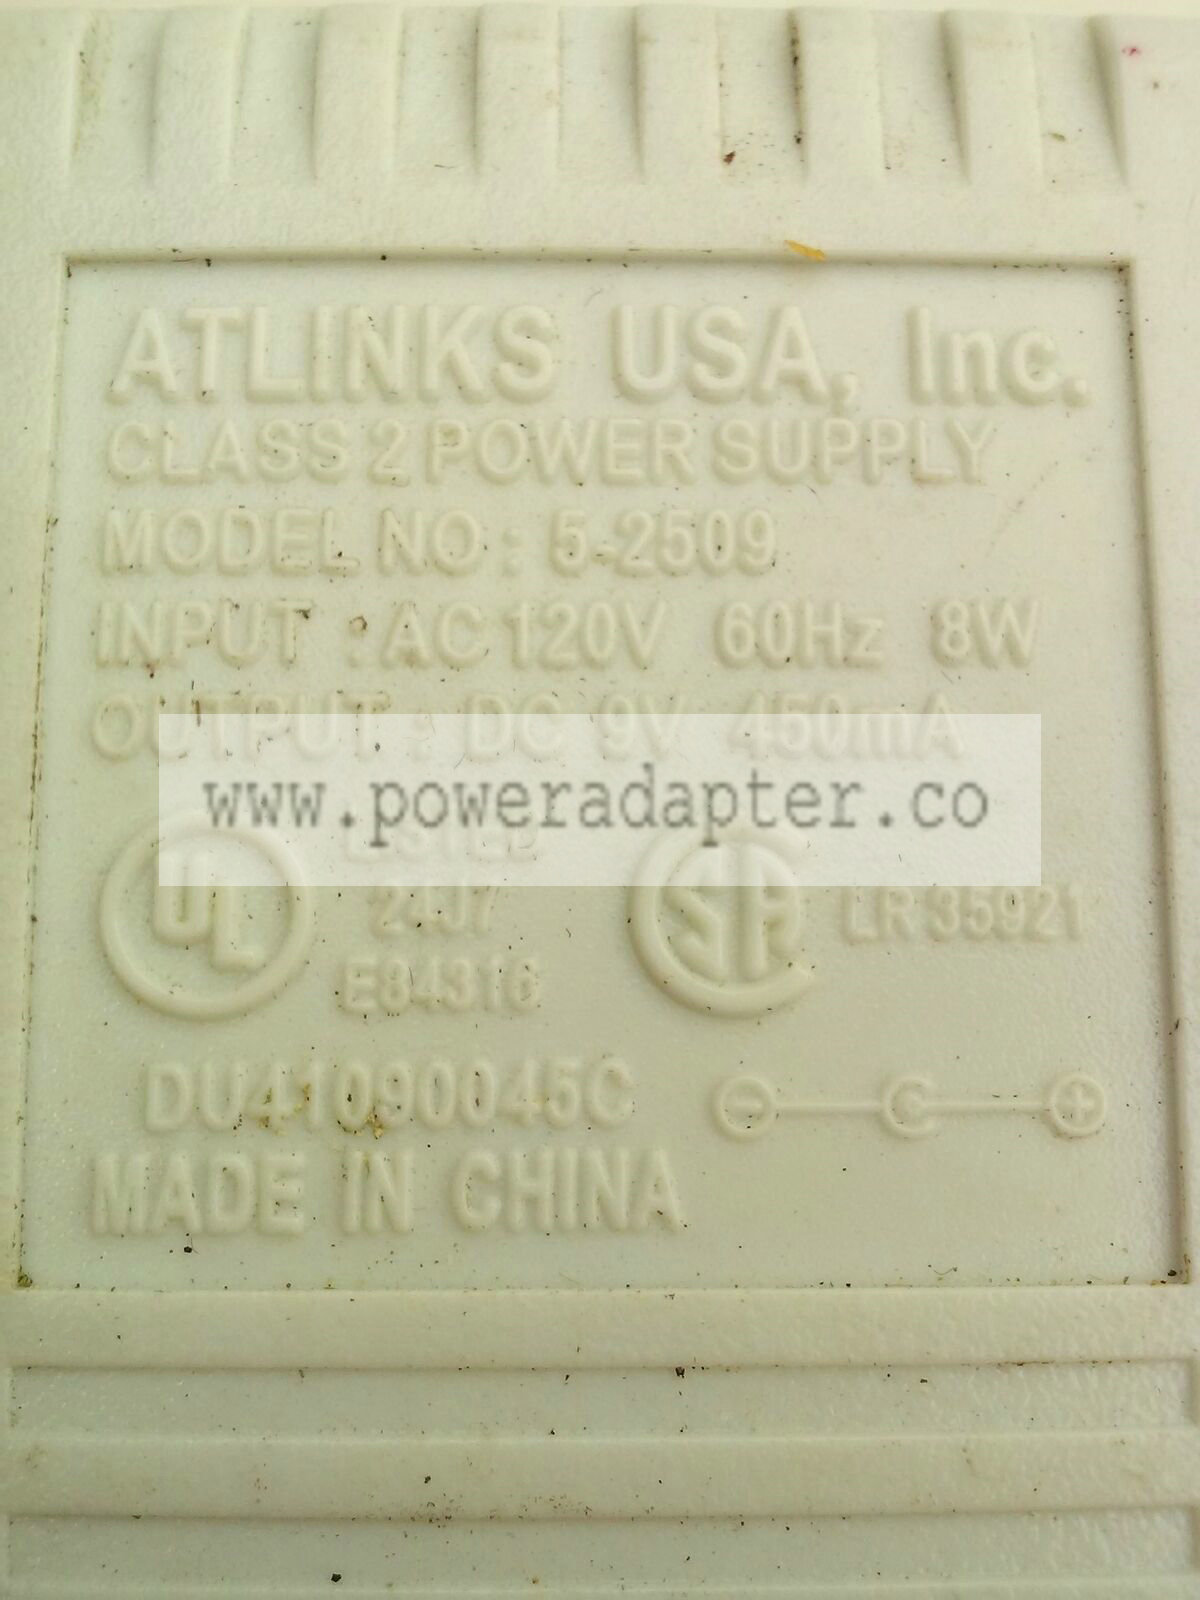 Atlinks USA Inc Class 2 AC Power Supply 5-2509 Adapter 9VDC 450mA Brand: ATLINKS USA, Inc. MPN: 5-2509 Model: 5-25